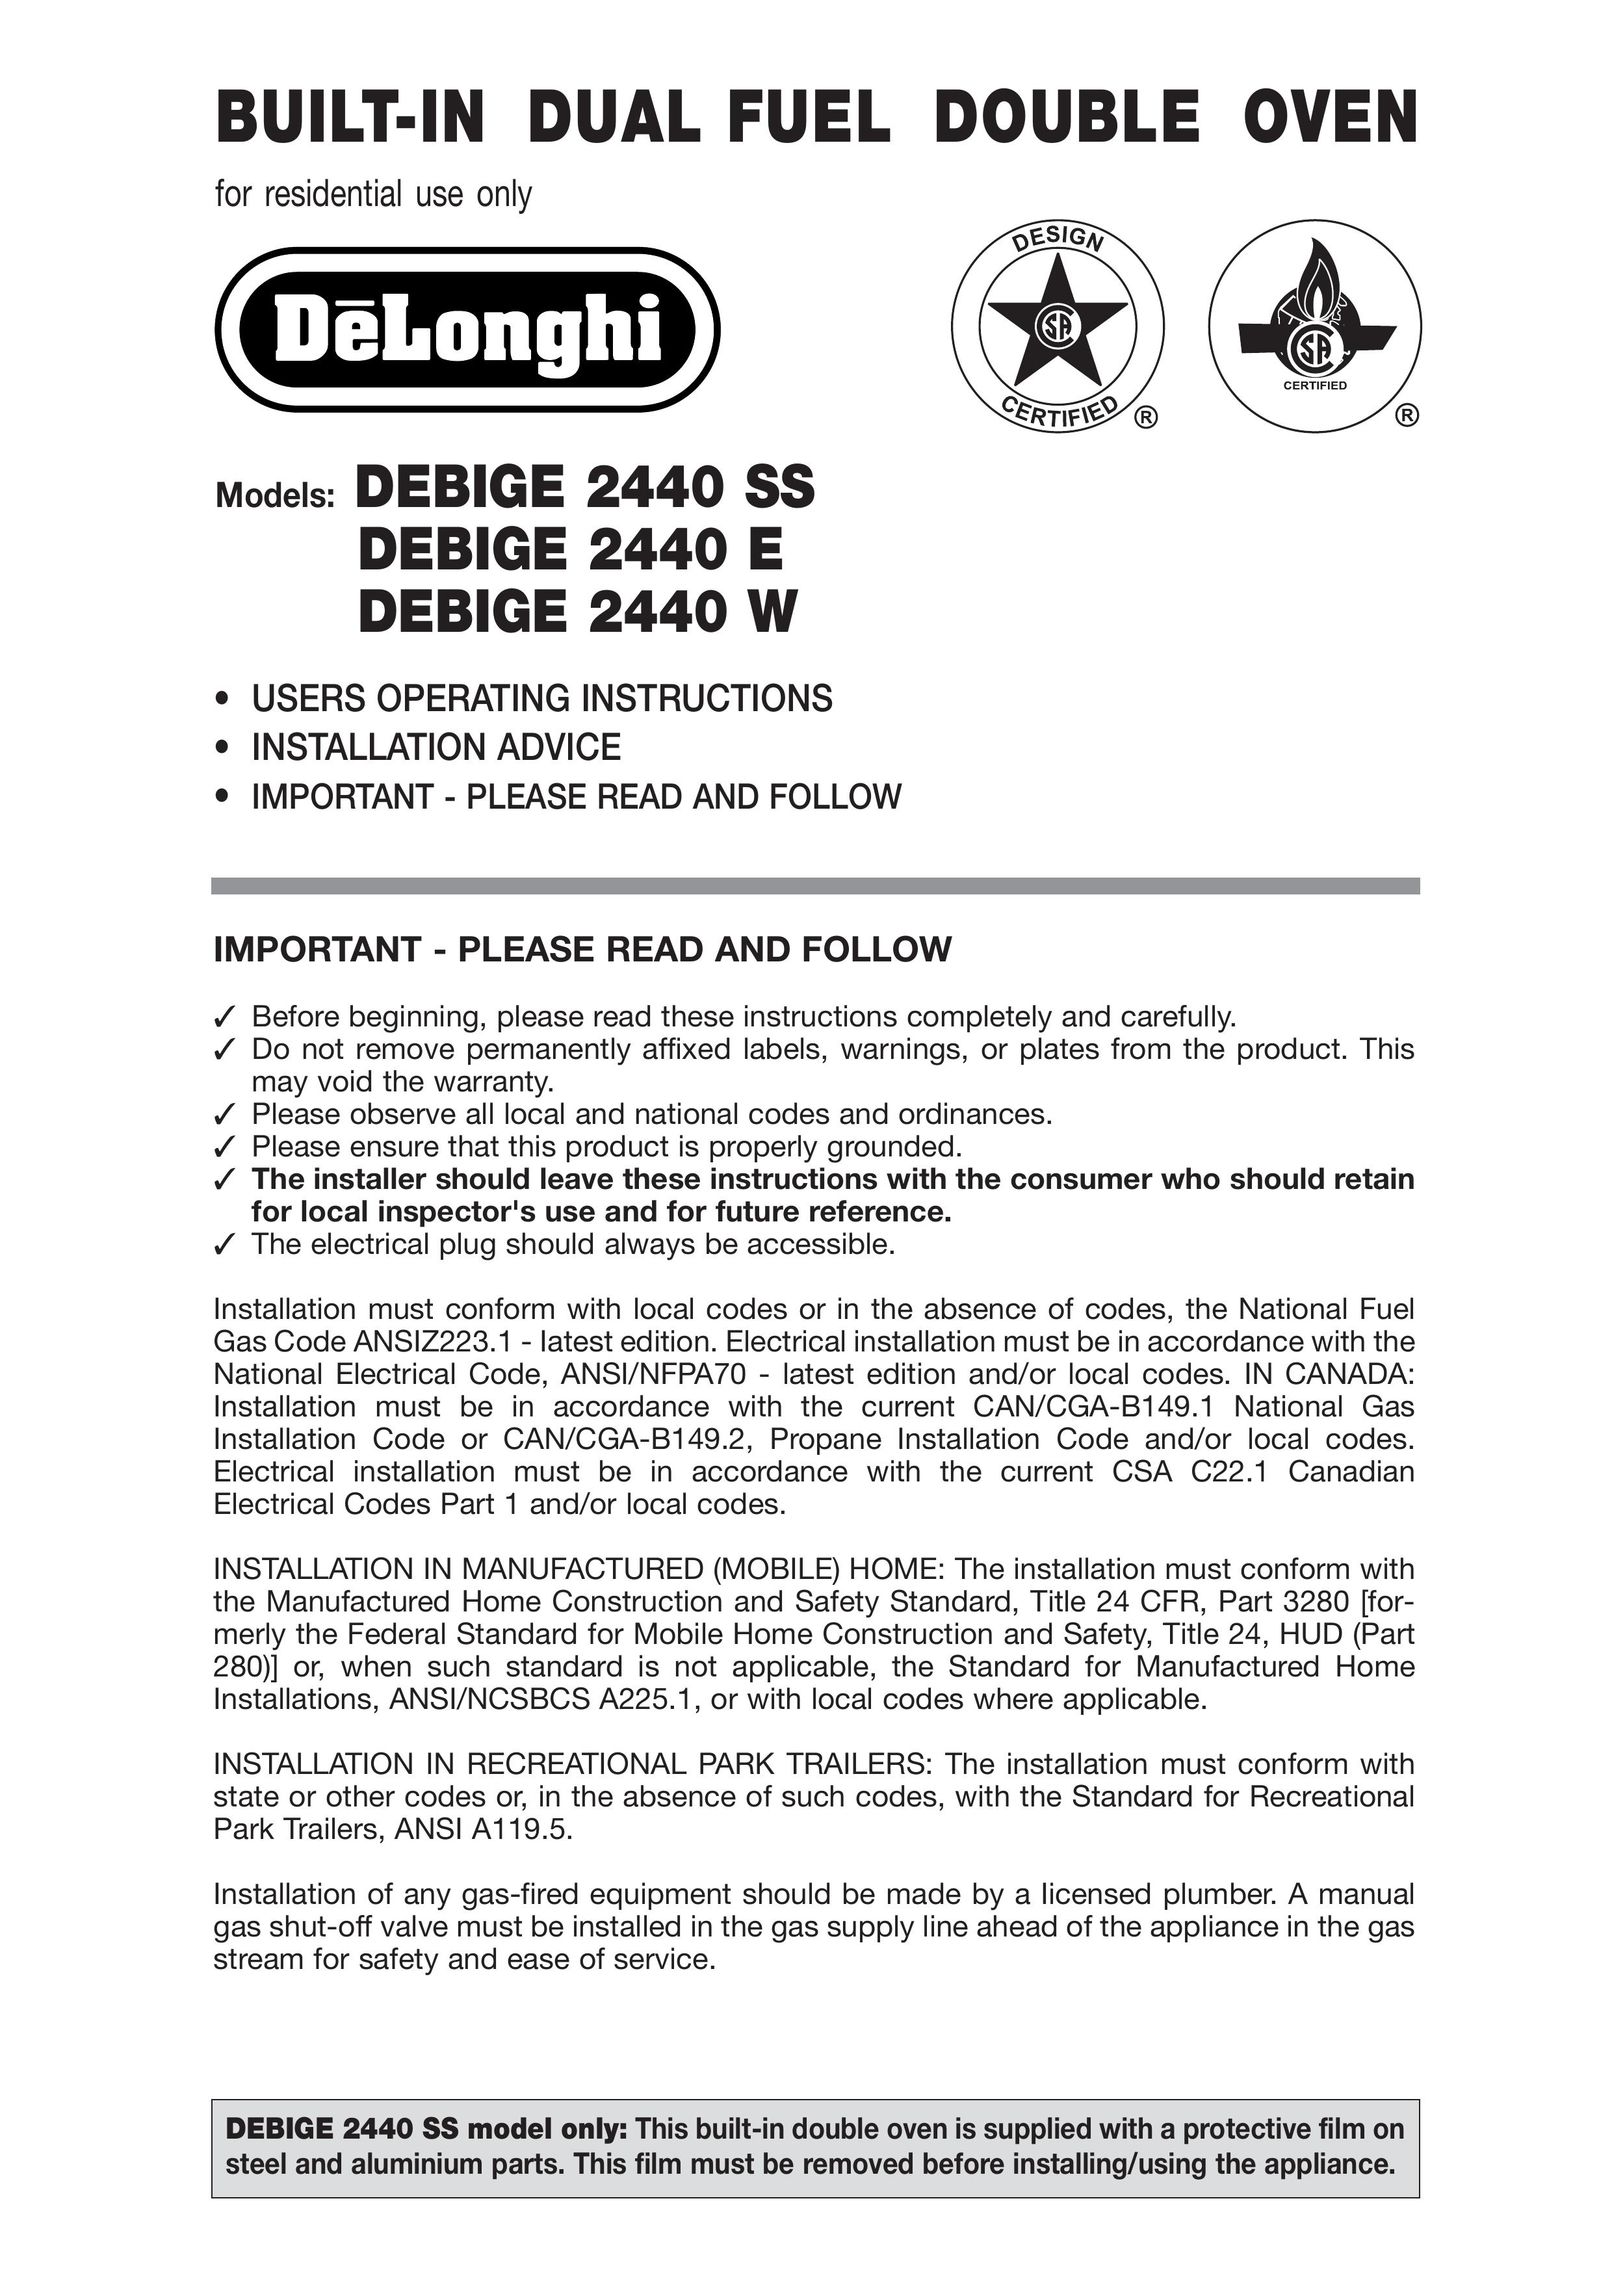 DeLonghi DEBIGE 2440 E Double Oven User Manual